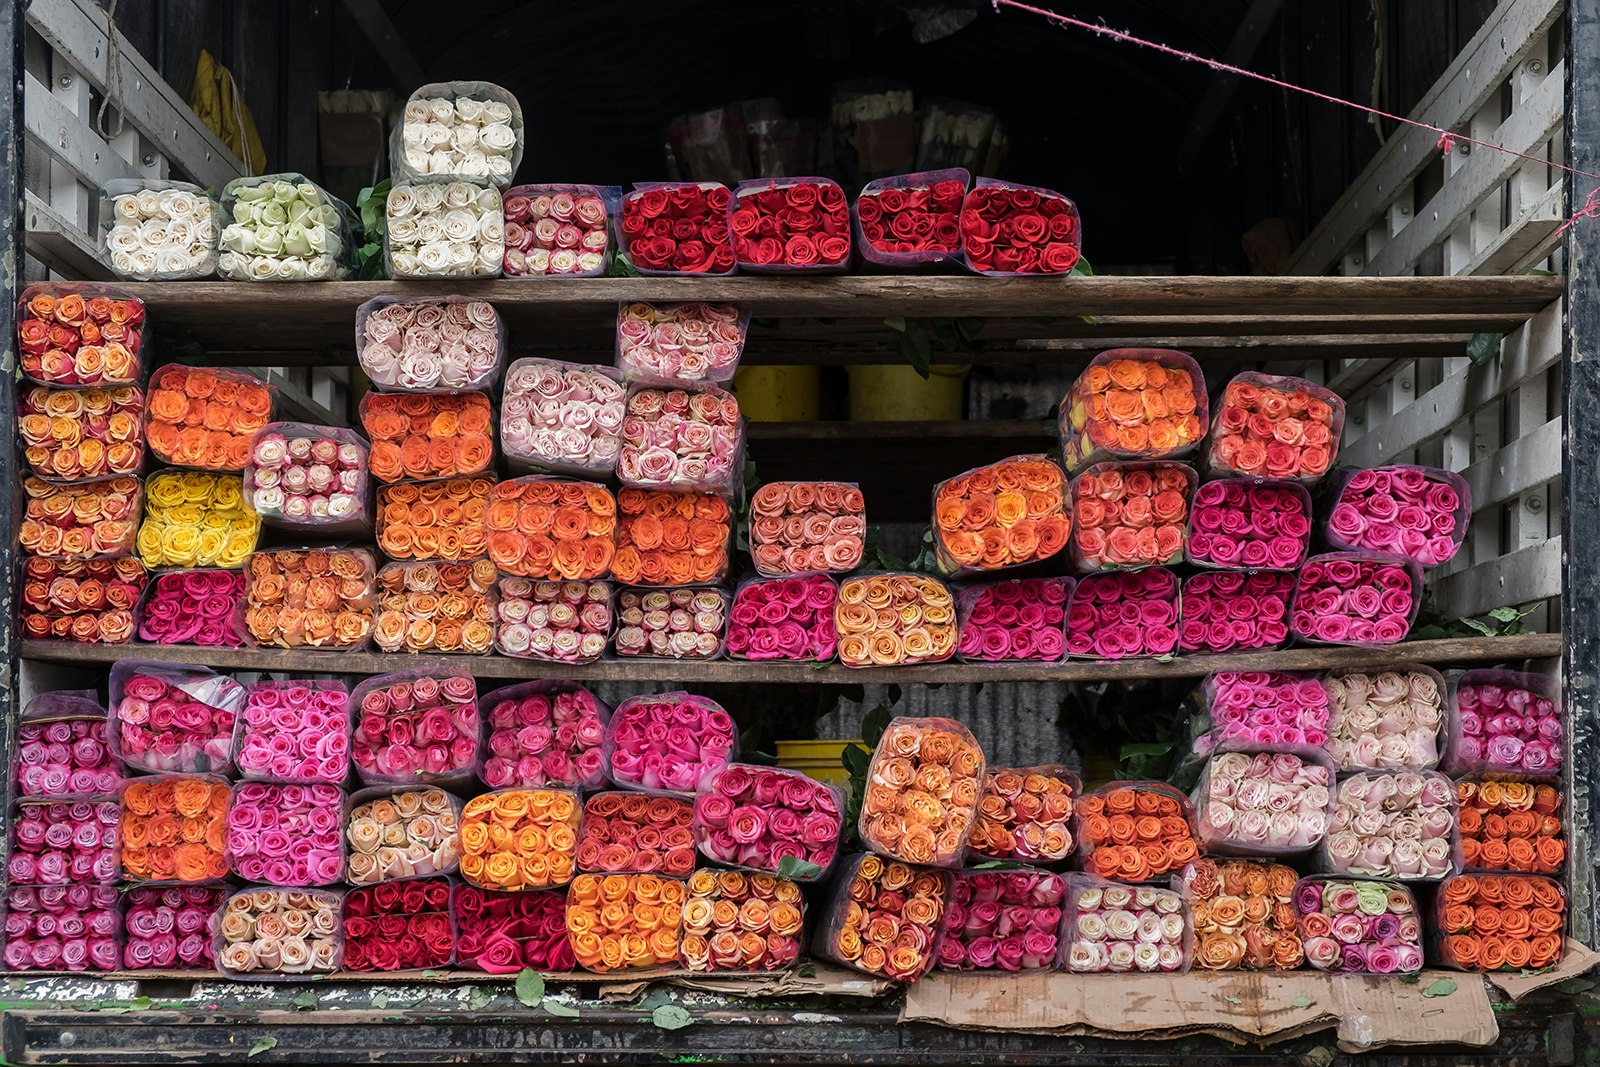 Bundles of orange, pink and red flowers sit in bundles on wooden shelves in Bogotá, Colombia